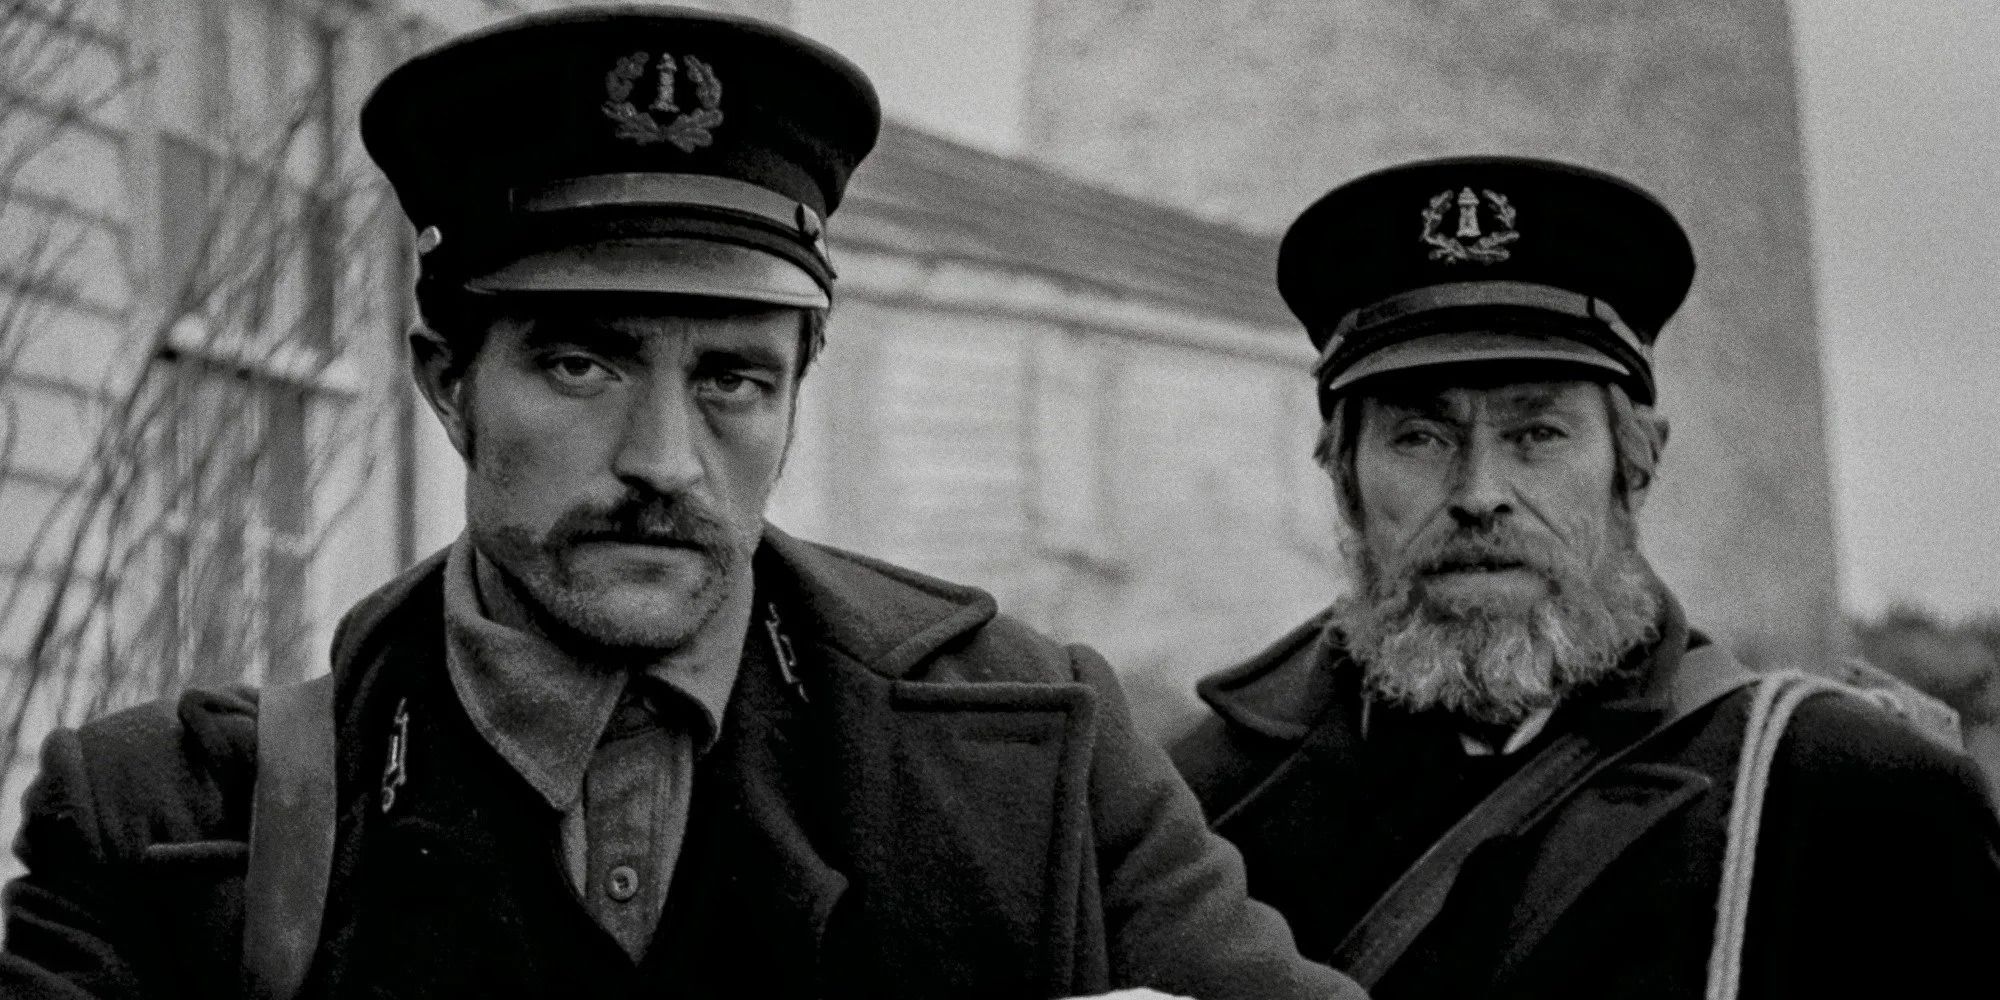 Close-up of Ephraim Winslow (Robert Pattinson) and Thomas Wake (Willem Dafoe) from 'The Lighthouse'